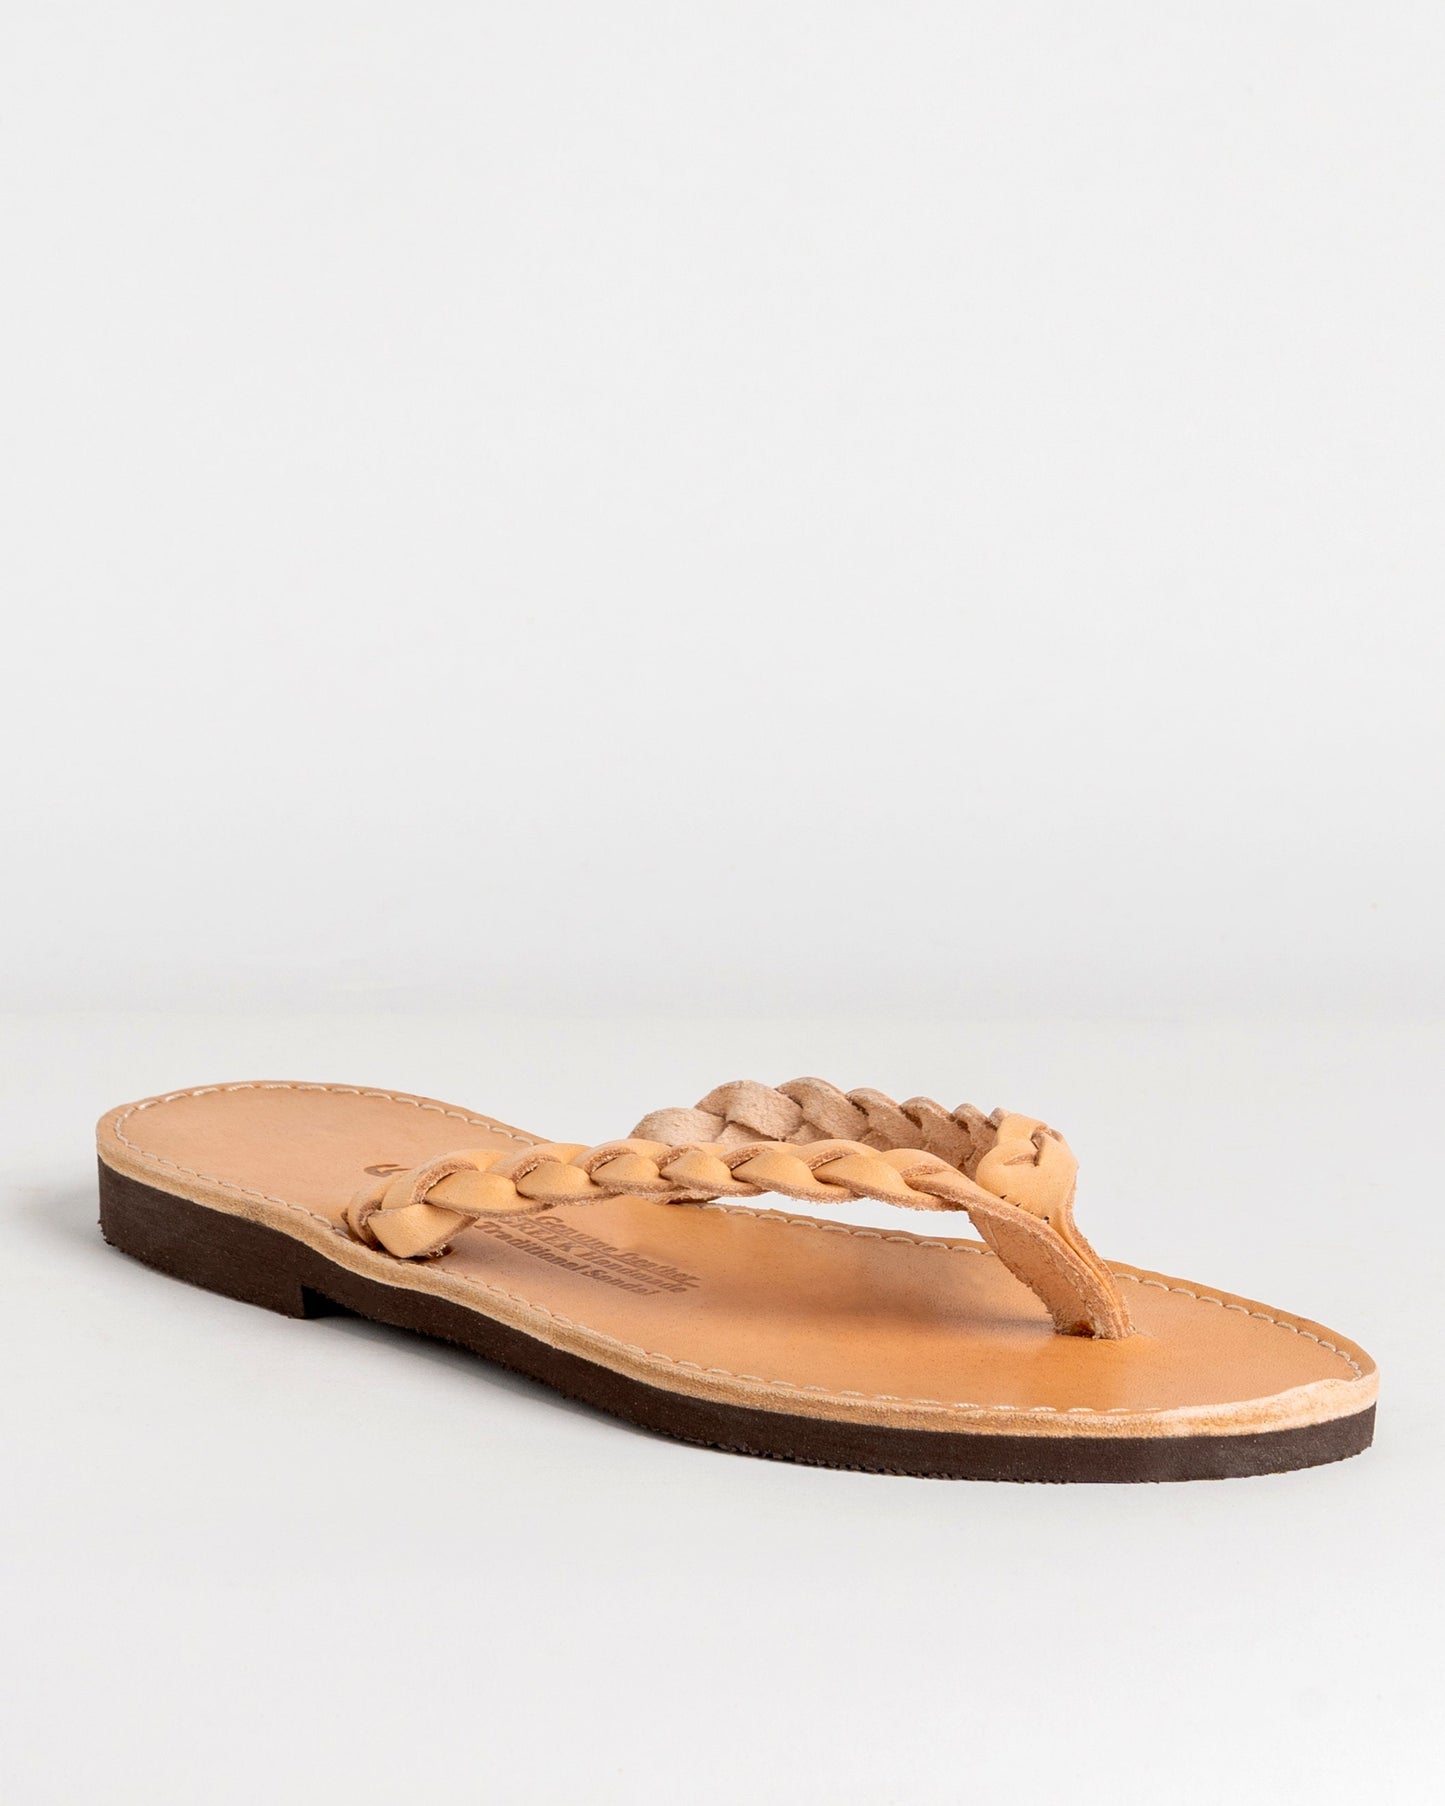 Natural leather flip flop sandals, Minimalist leather flats, Womens leather braided thong sandals